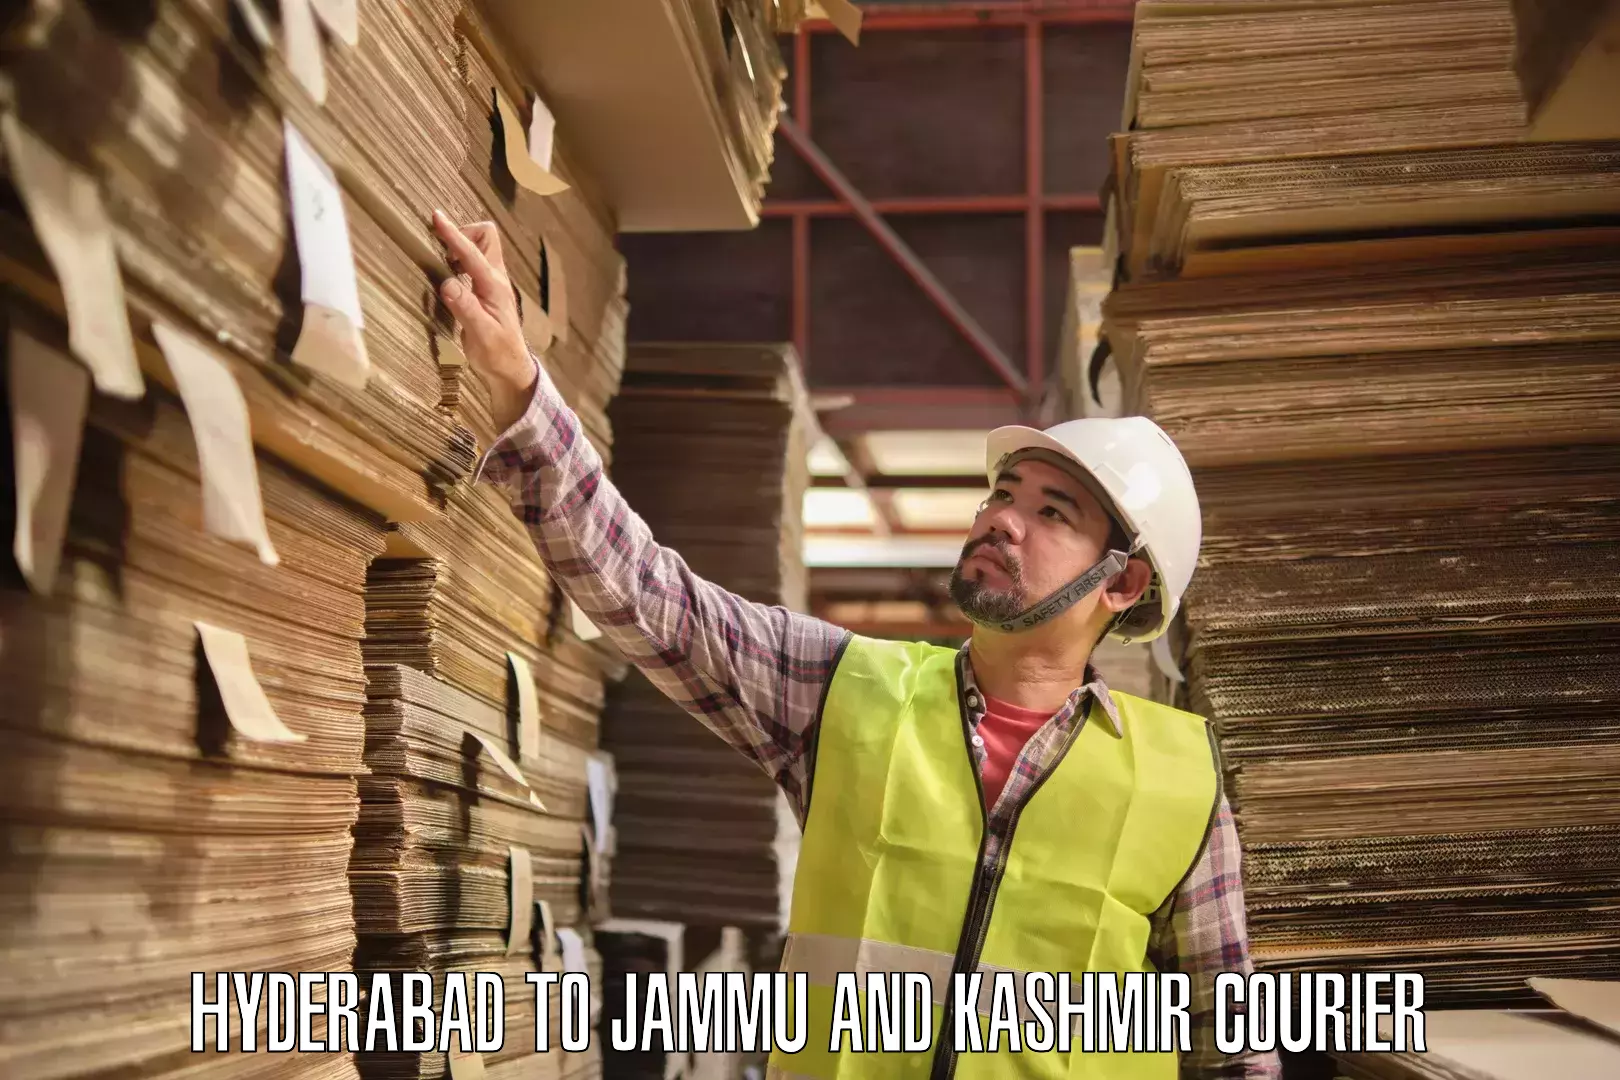 High-speed parcel service Hyderabad to Jammu and Kashmir